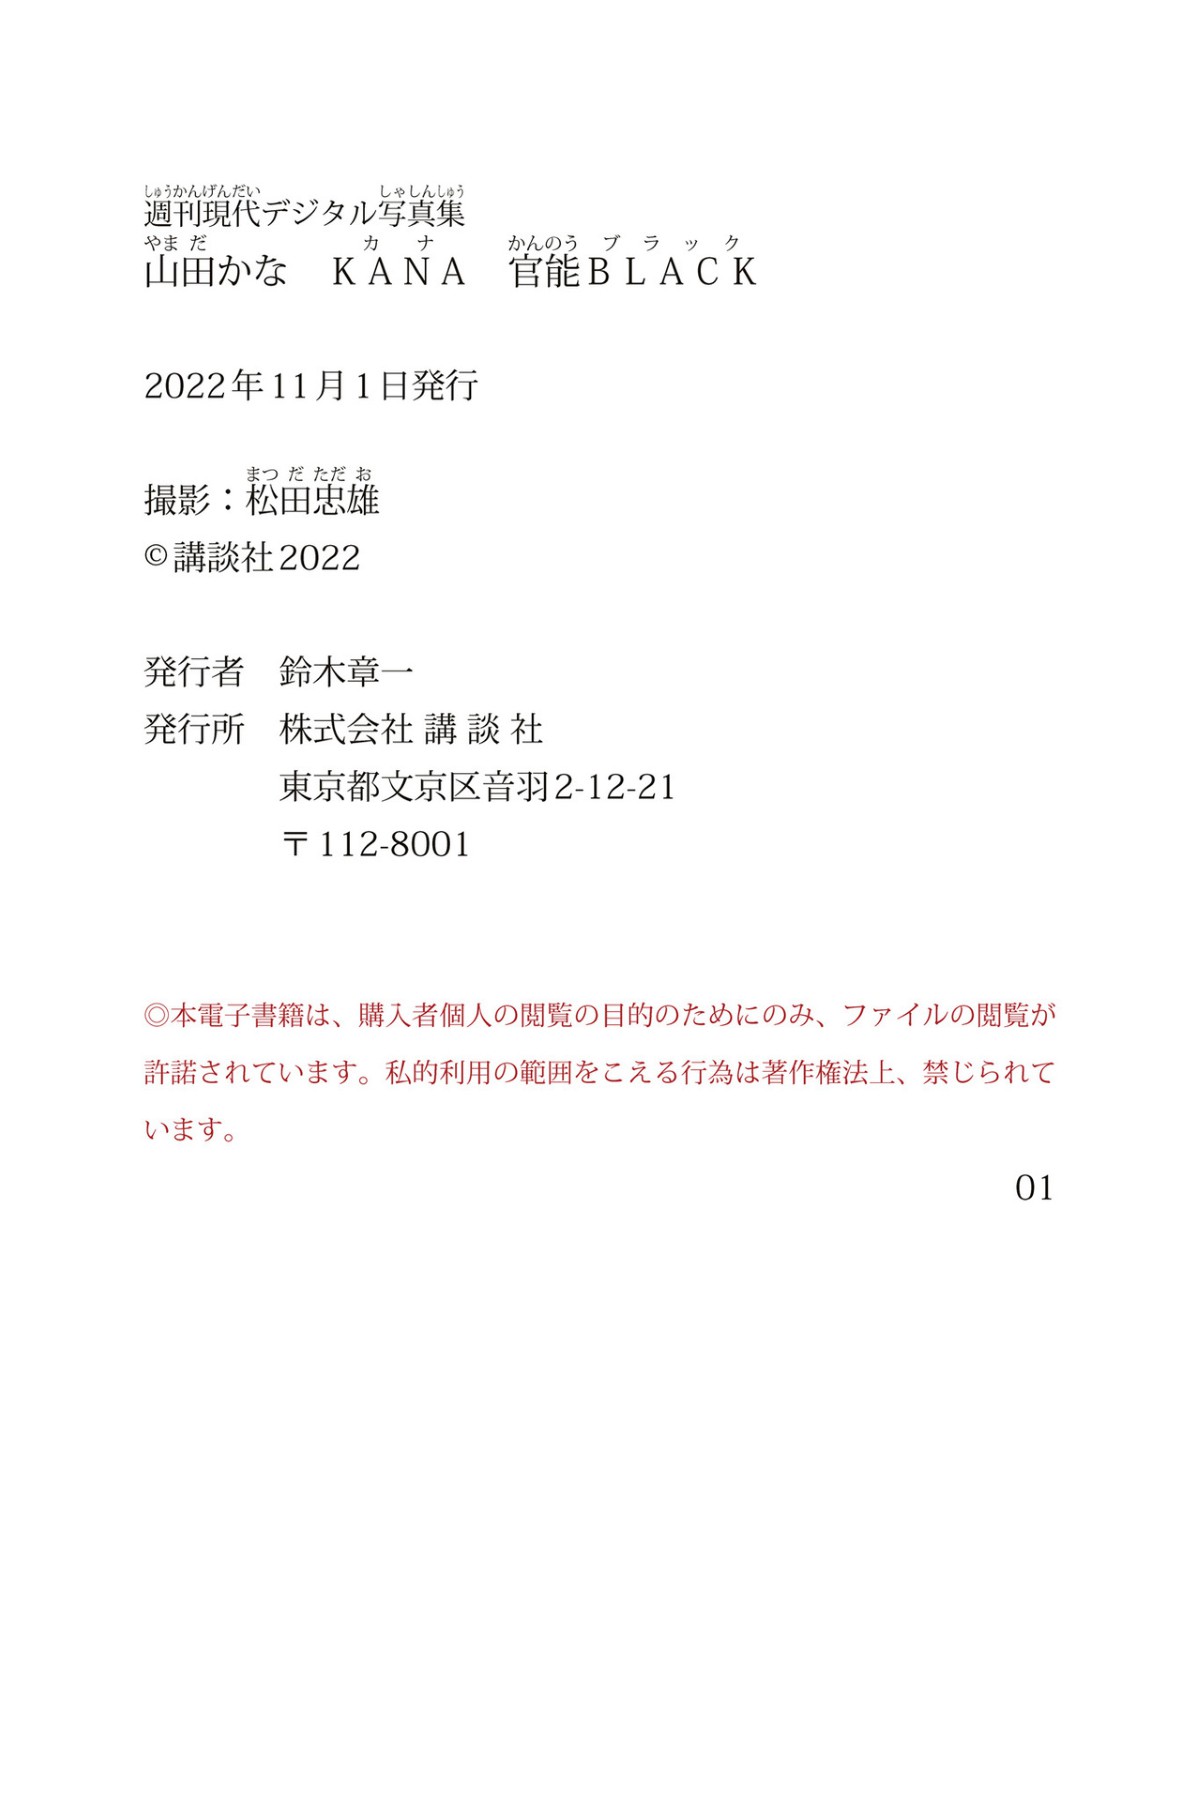 Weekly Gendai Photobook 2022 10 24 Kana Yamada 山田かな Kana Sensual Black 0062 2396700326.jpg